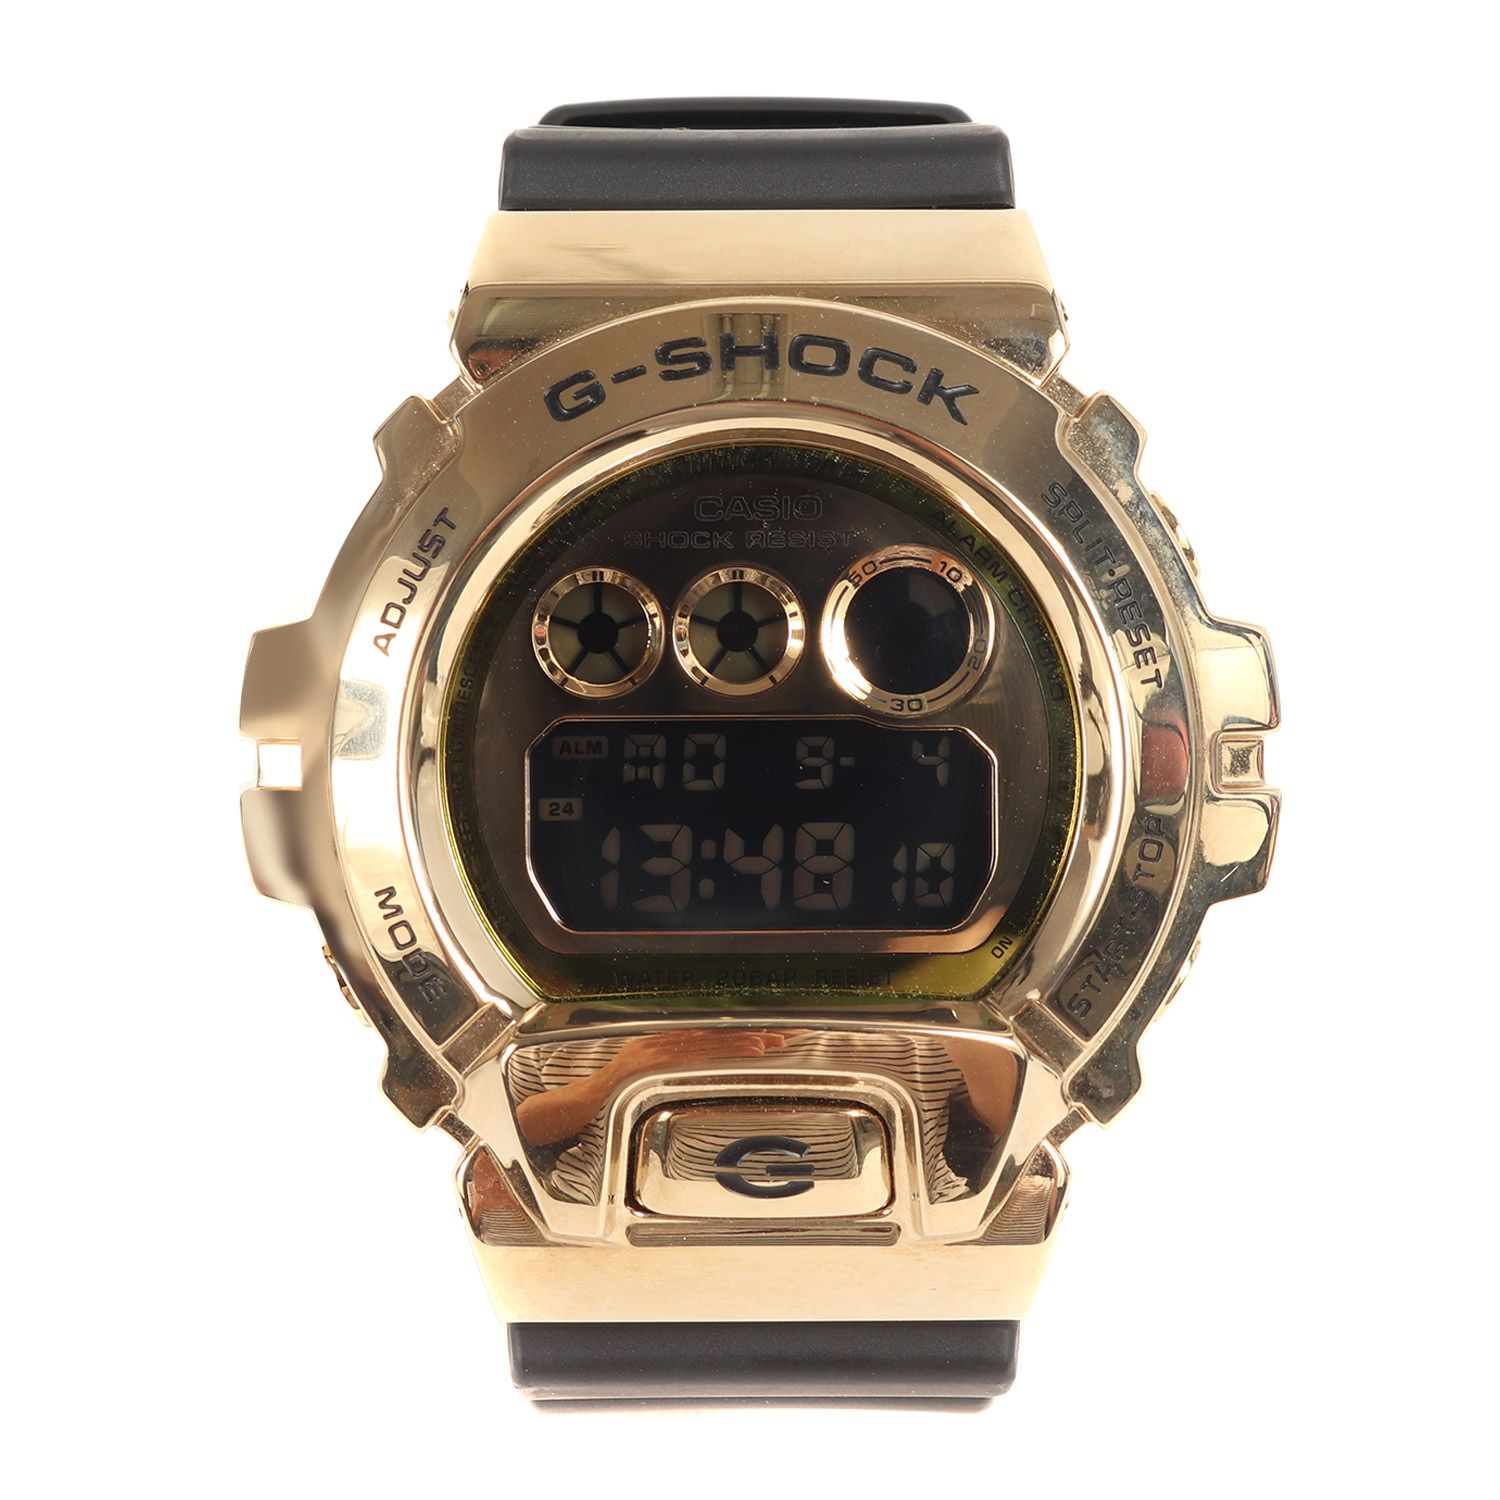 CASIO G-SHOCK GM-6900G-9JF ゴールド メタル - 時計